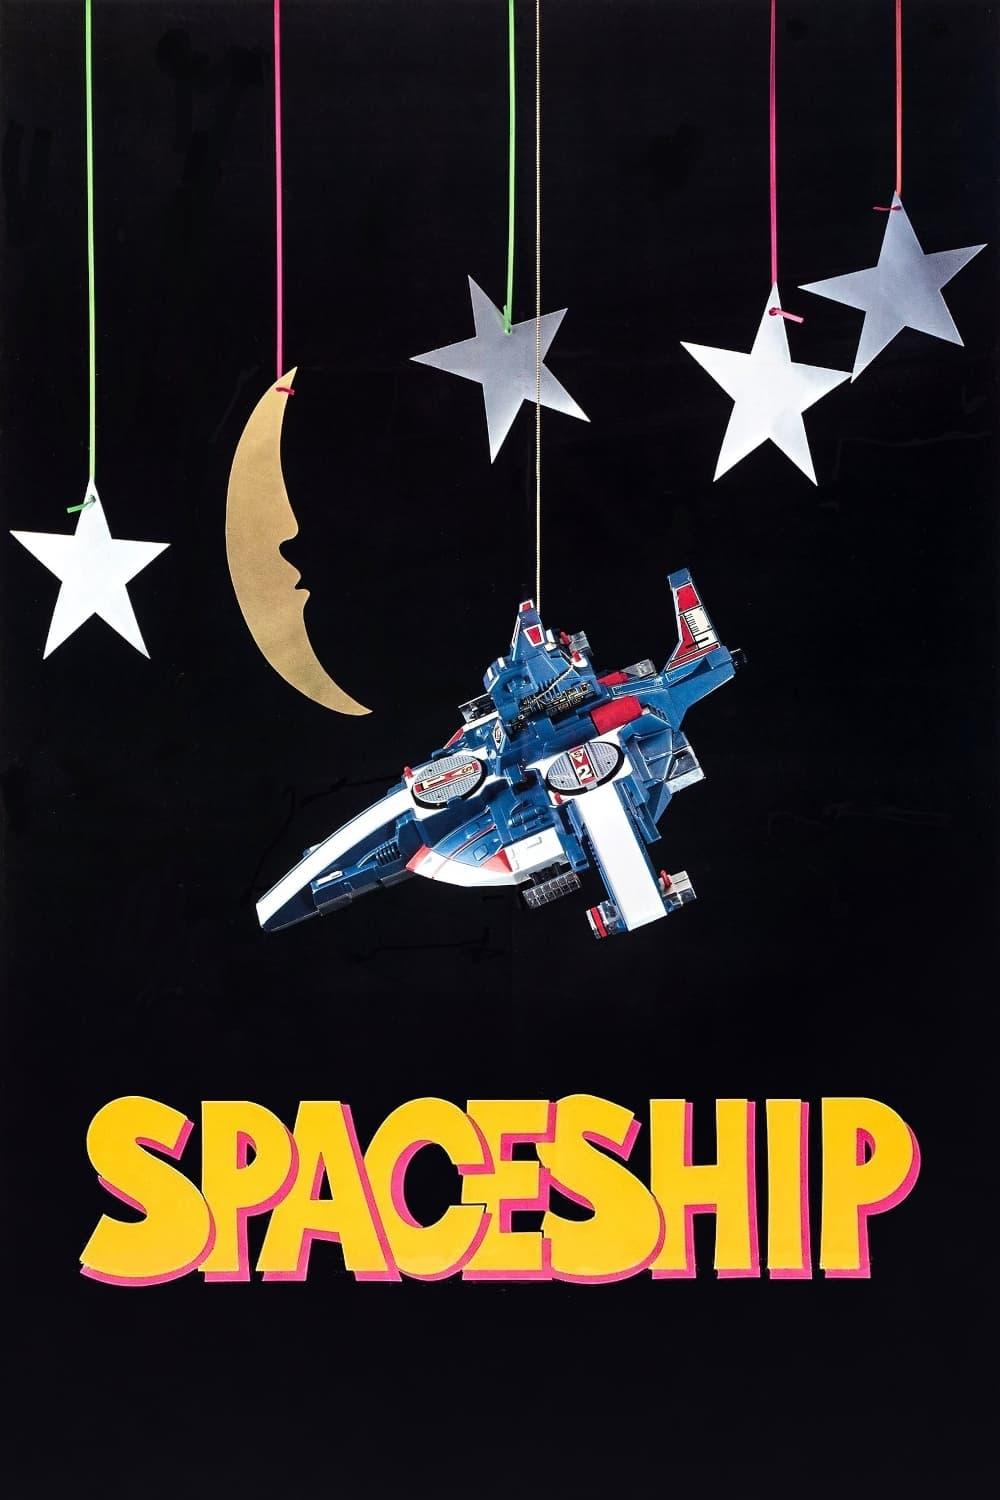 Spaceship poster